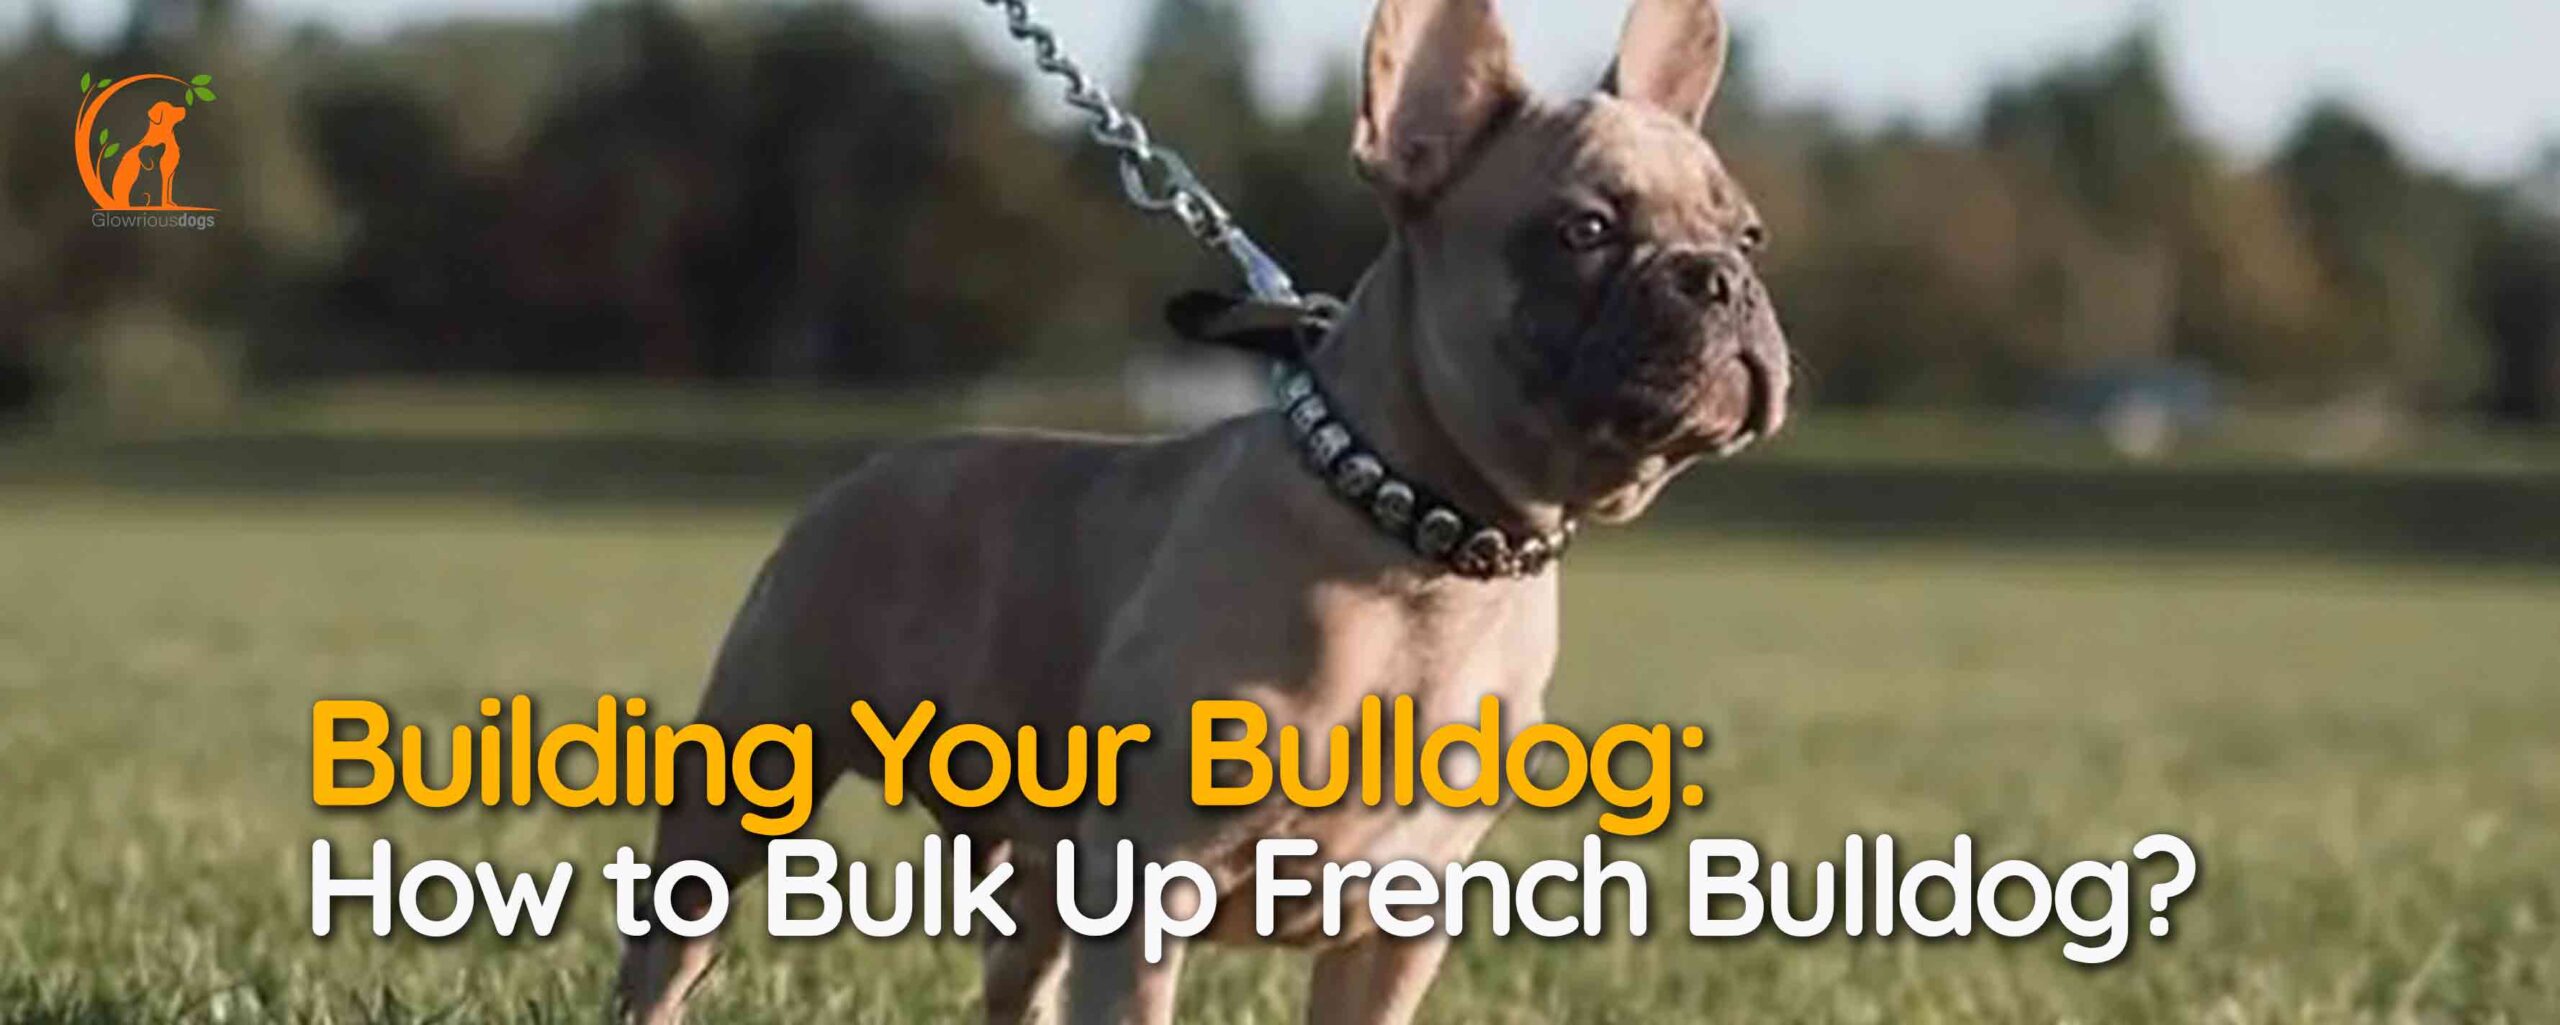 Building Your Bulldog: How to Bulk Up French Bulldog?